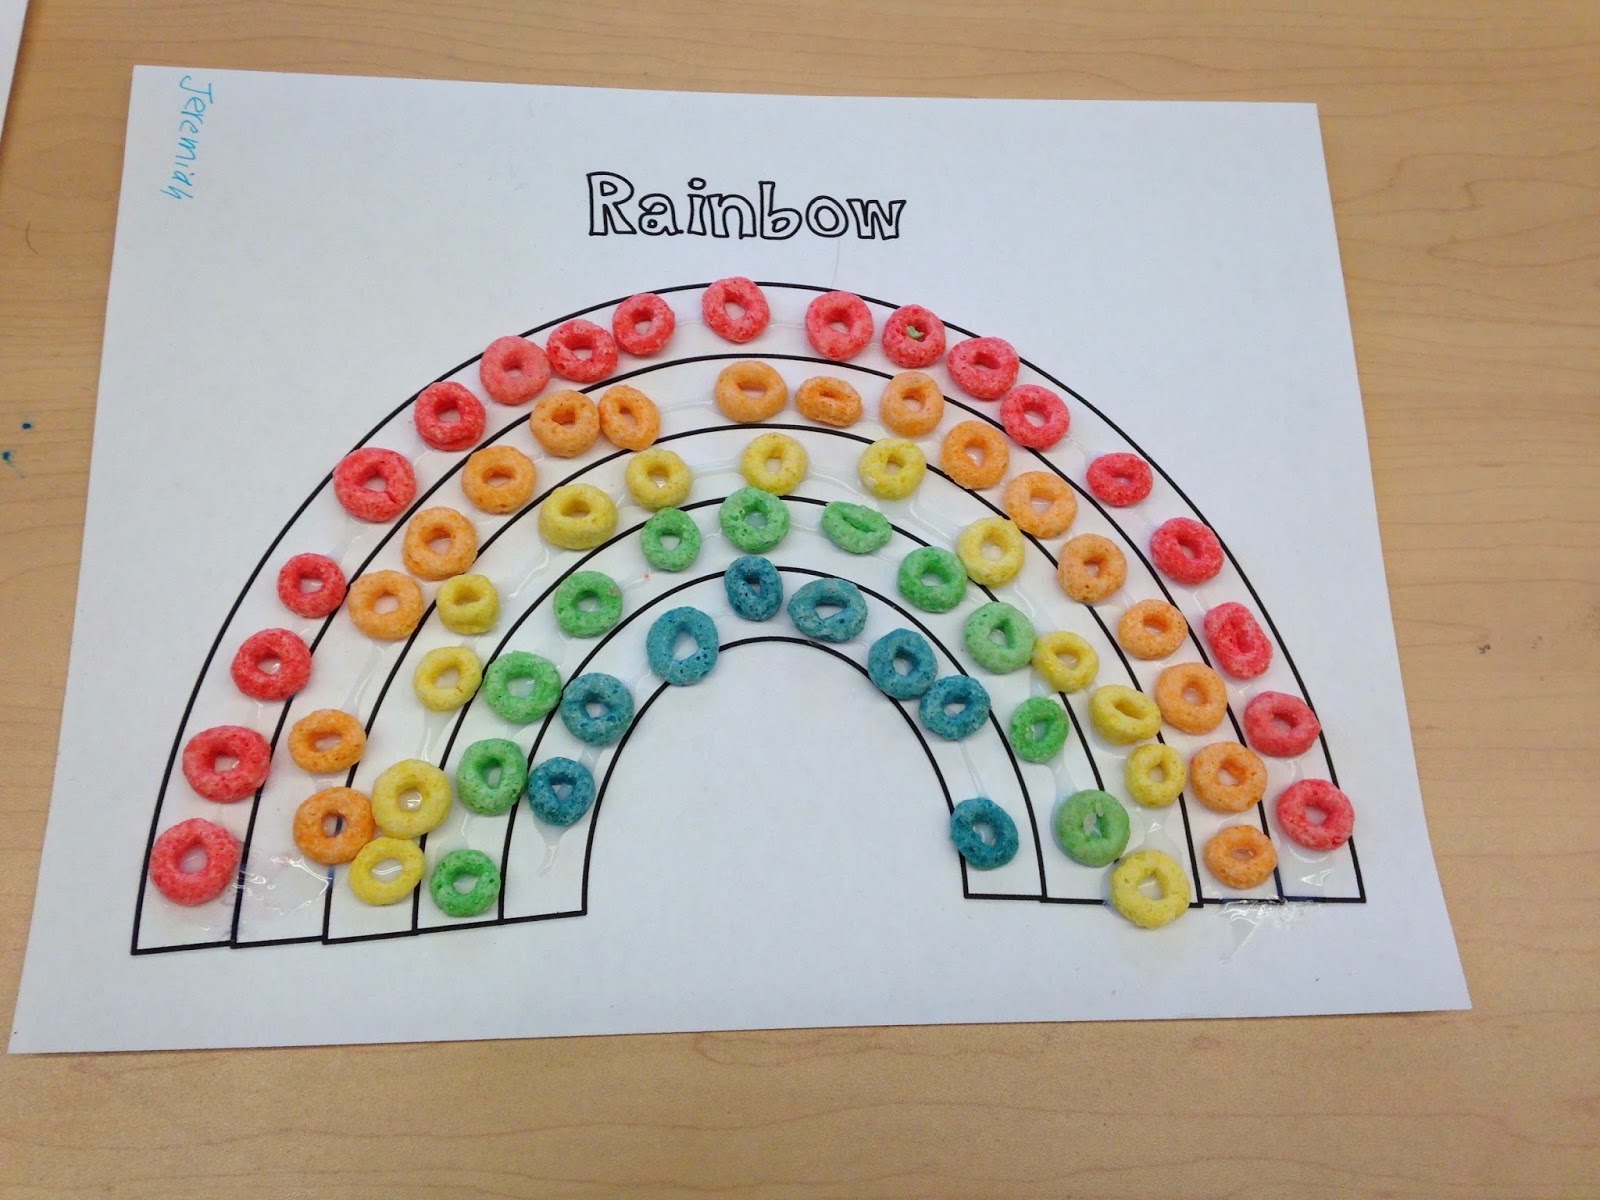 autism-tank-rainbow-craftivity-with-fruit-loops